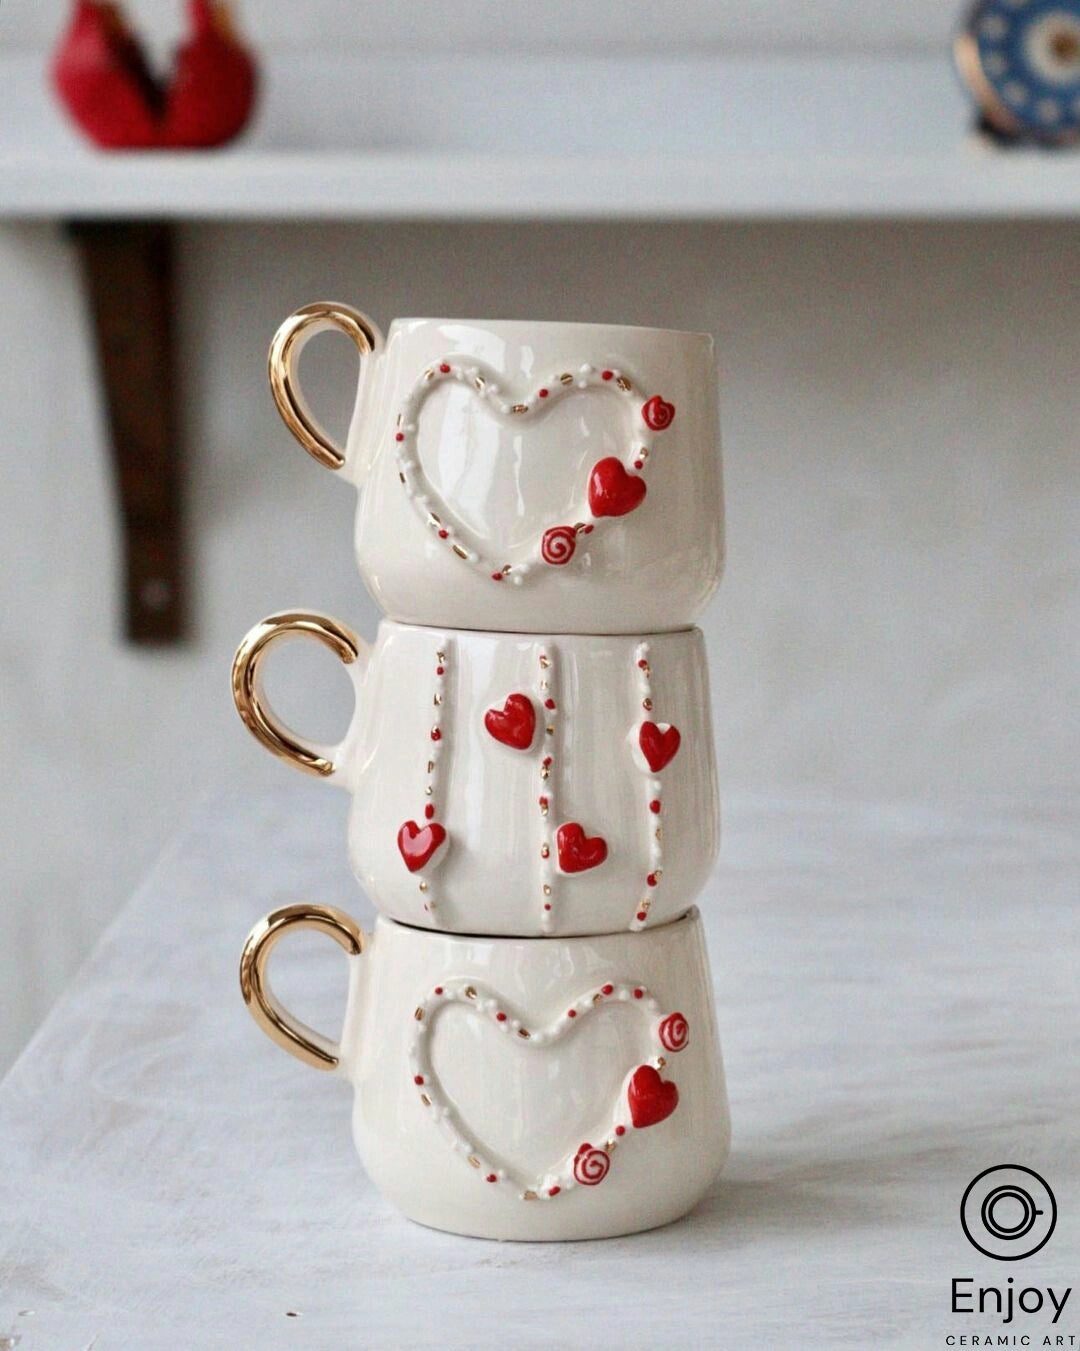 I Love NY Espresso Cup Small Ceramic Coffee Mug w/ Handle I Heart